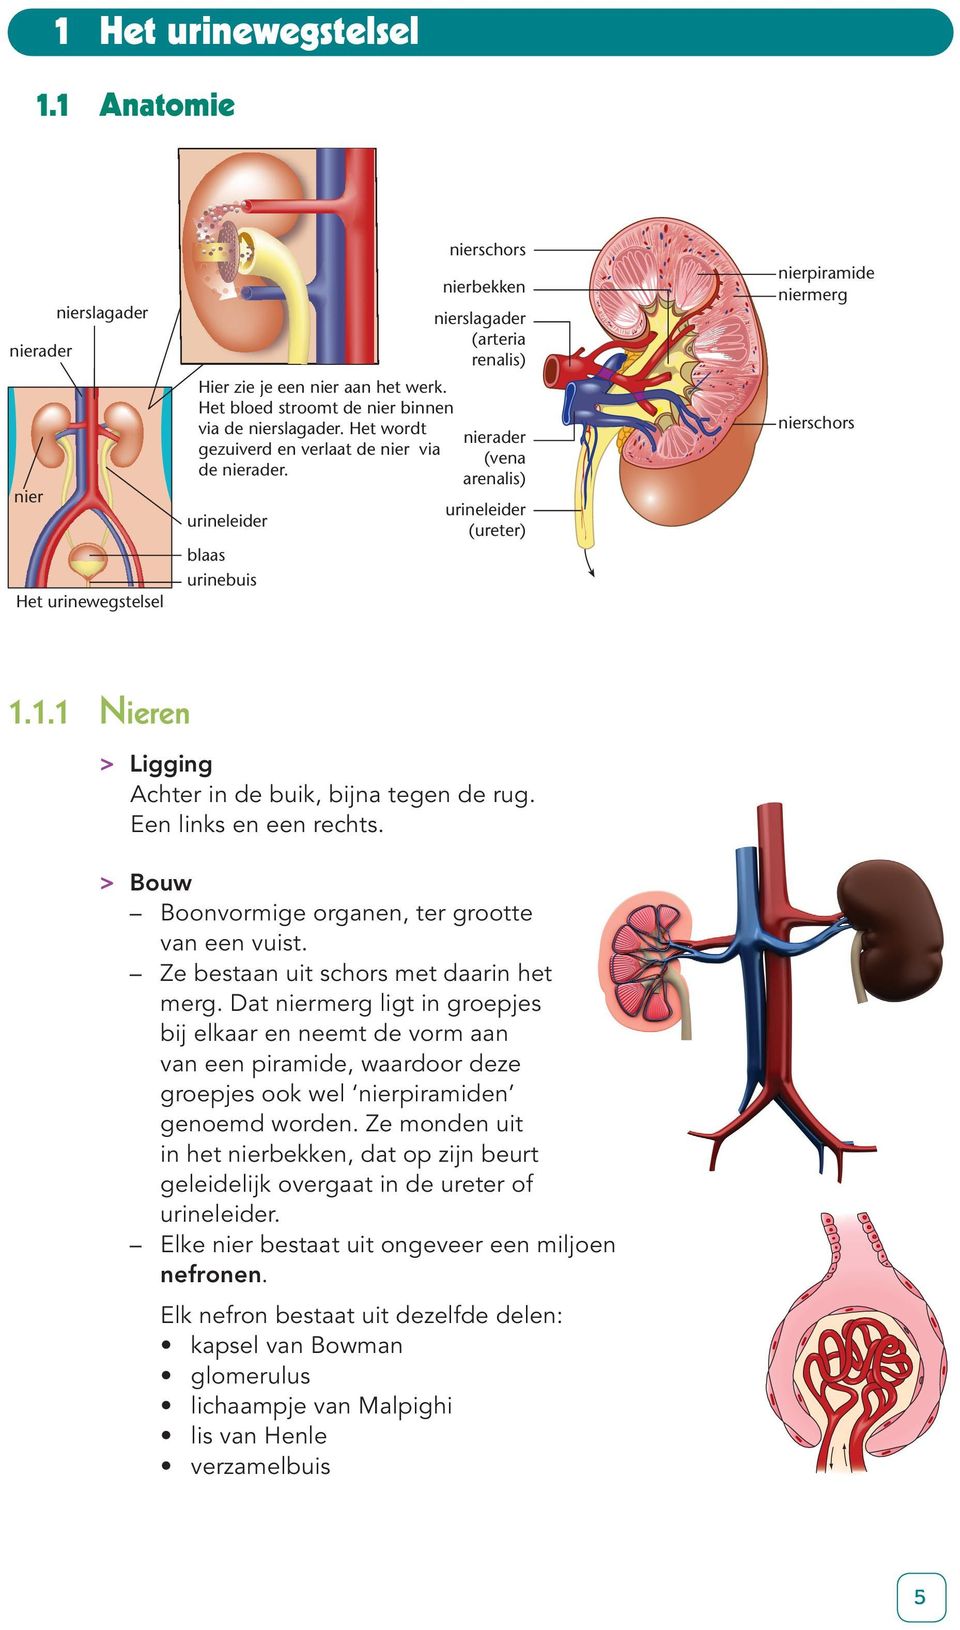 urineleider blaas urinebuis nierschors nierbekken nierslagader (arteria renalis) nierader (vena arenalis) urineleider (ureter) nierpiramide niermerg nierschors 1.